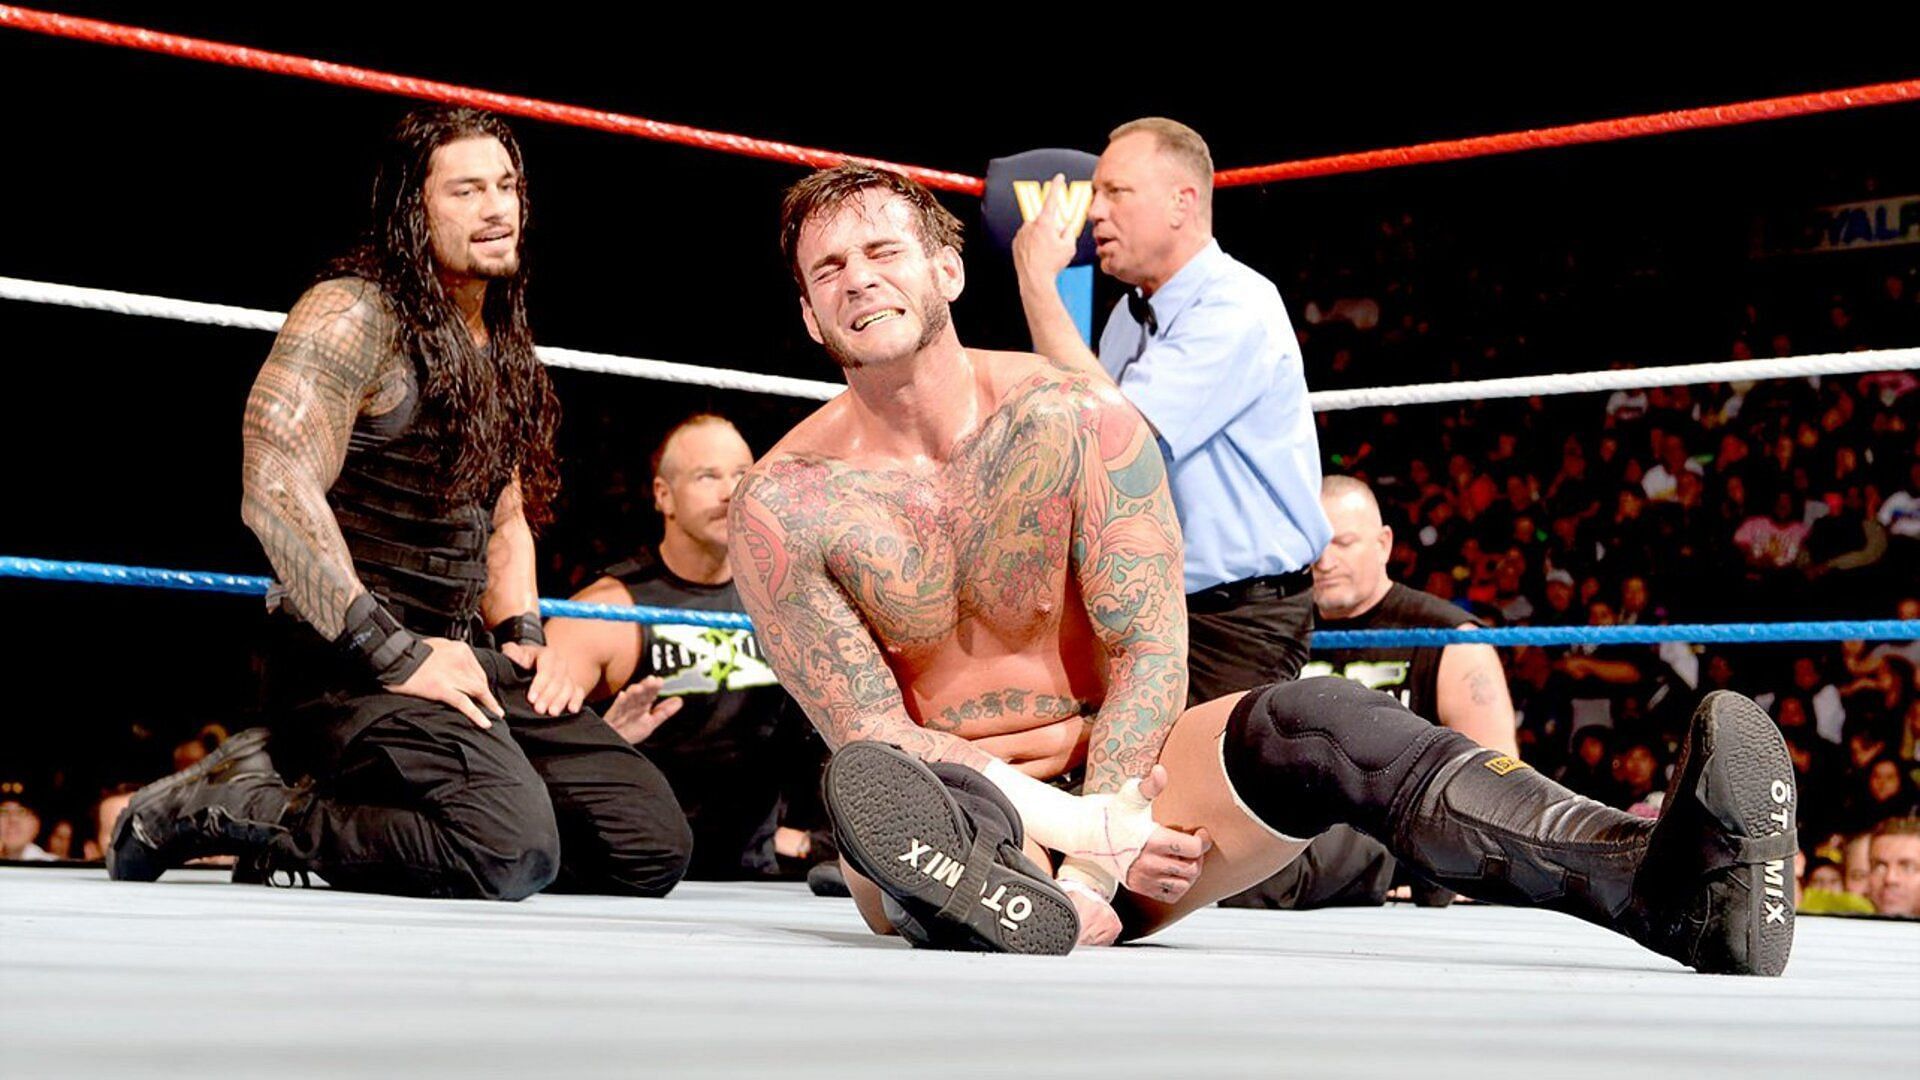 Roman Reigns vs. CM Punk on WWE RAW in January 2014